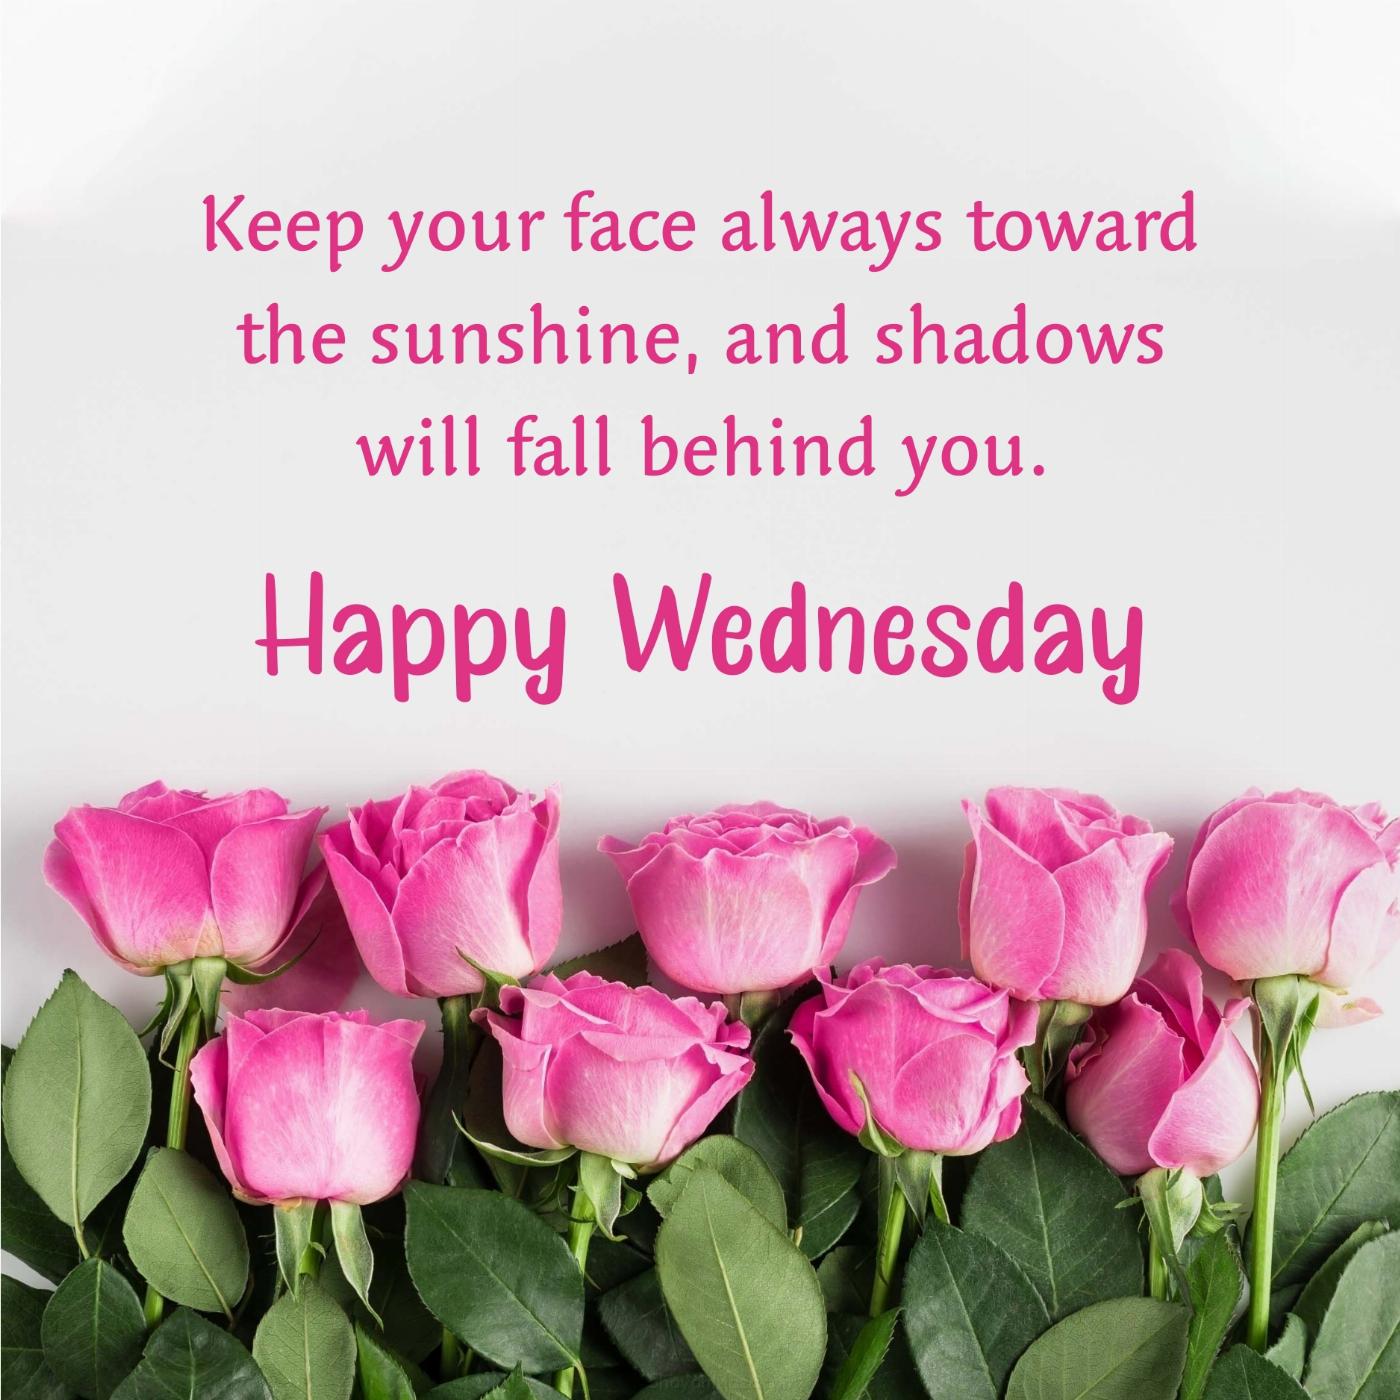 Happy Wednesday! Keep your face always toward the sunshine